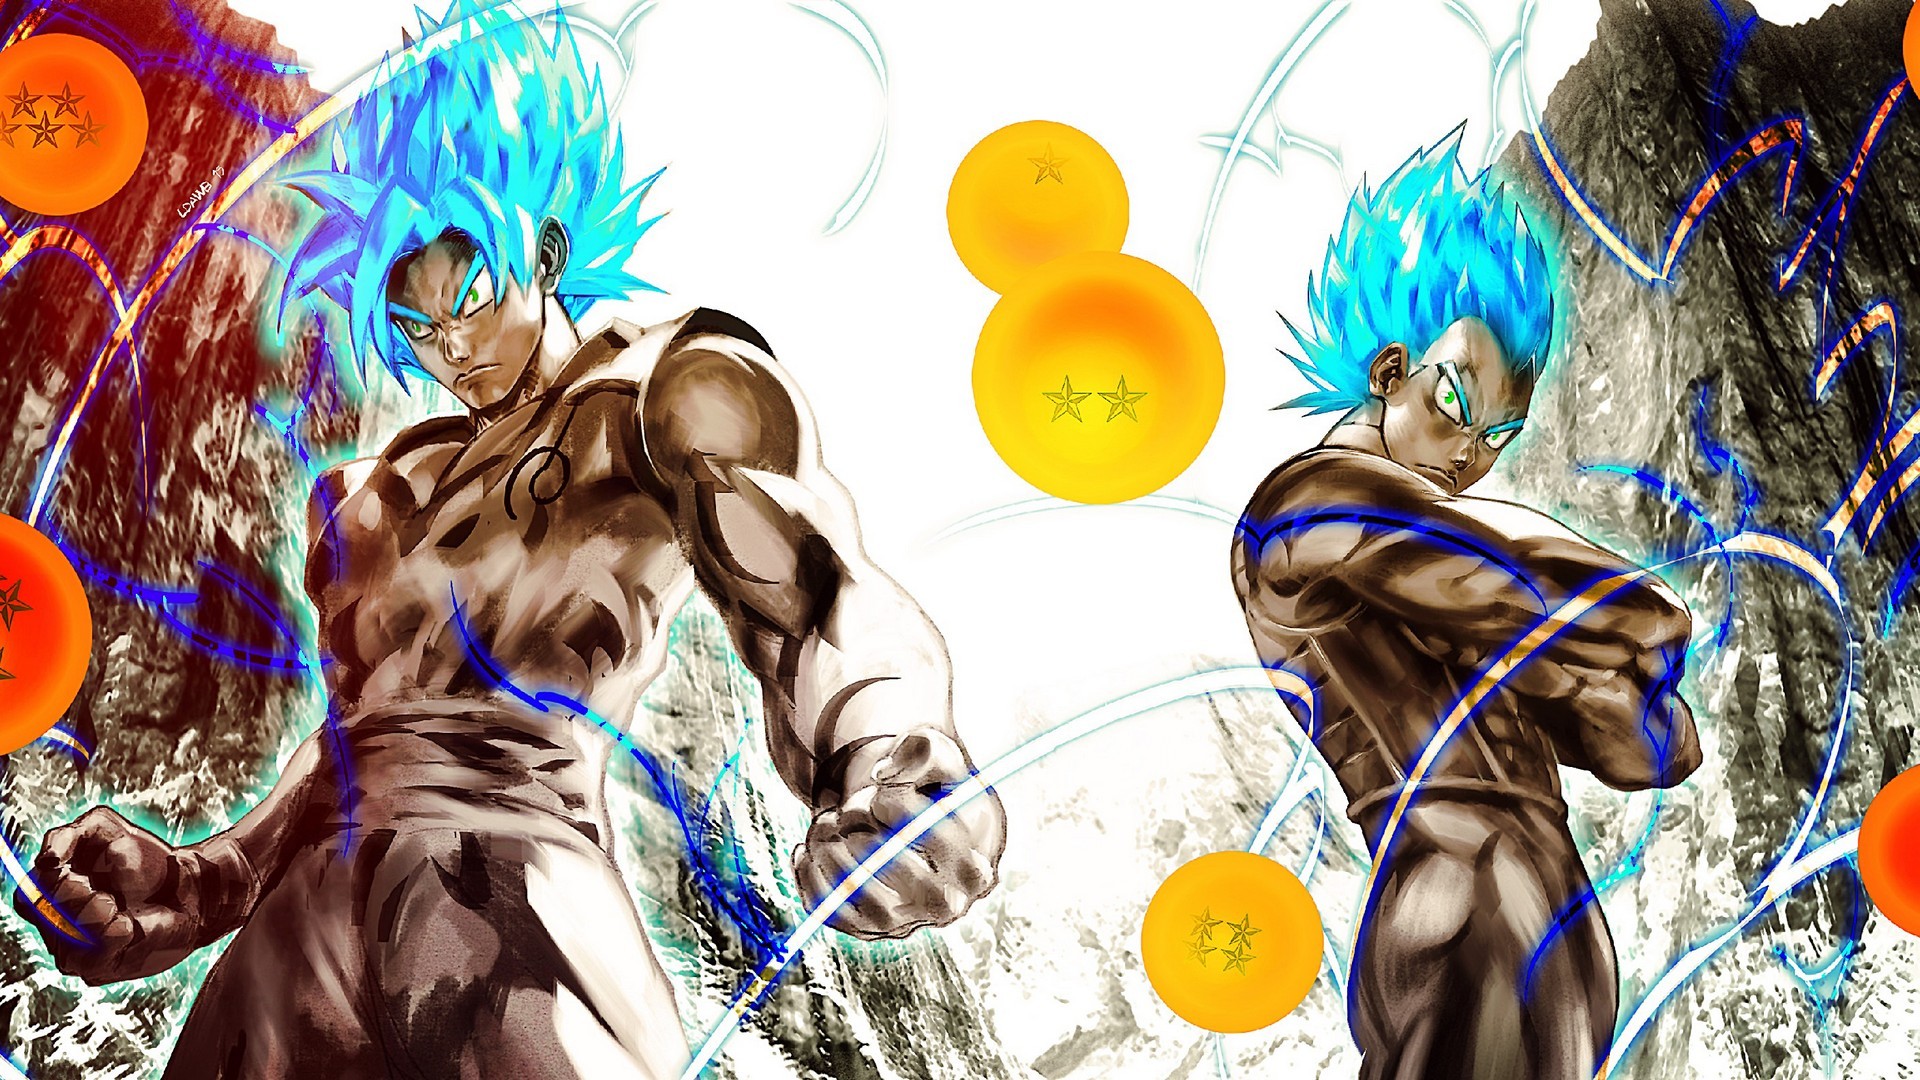 Goku Super Saiyan Wallpaper For Desktop | 2020 Cute Wallpapers